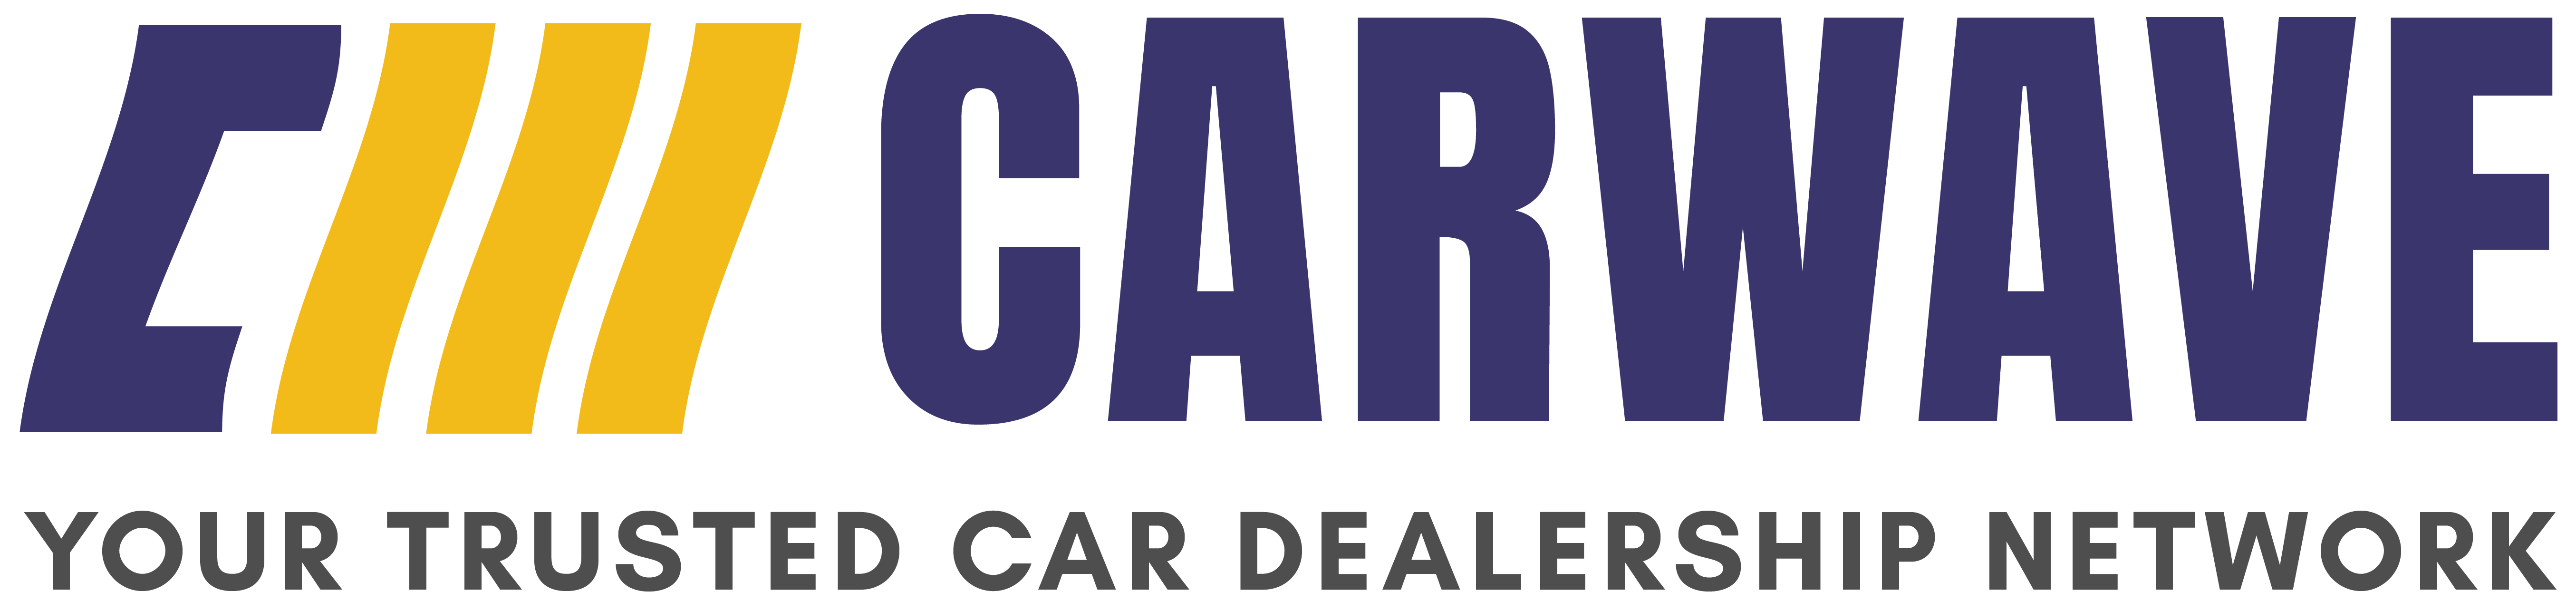 CARWAVE Logo